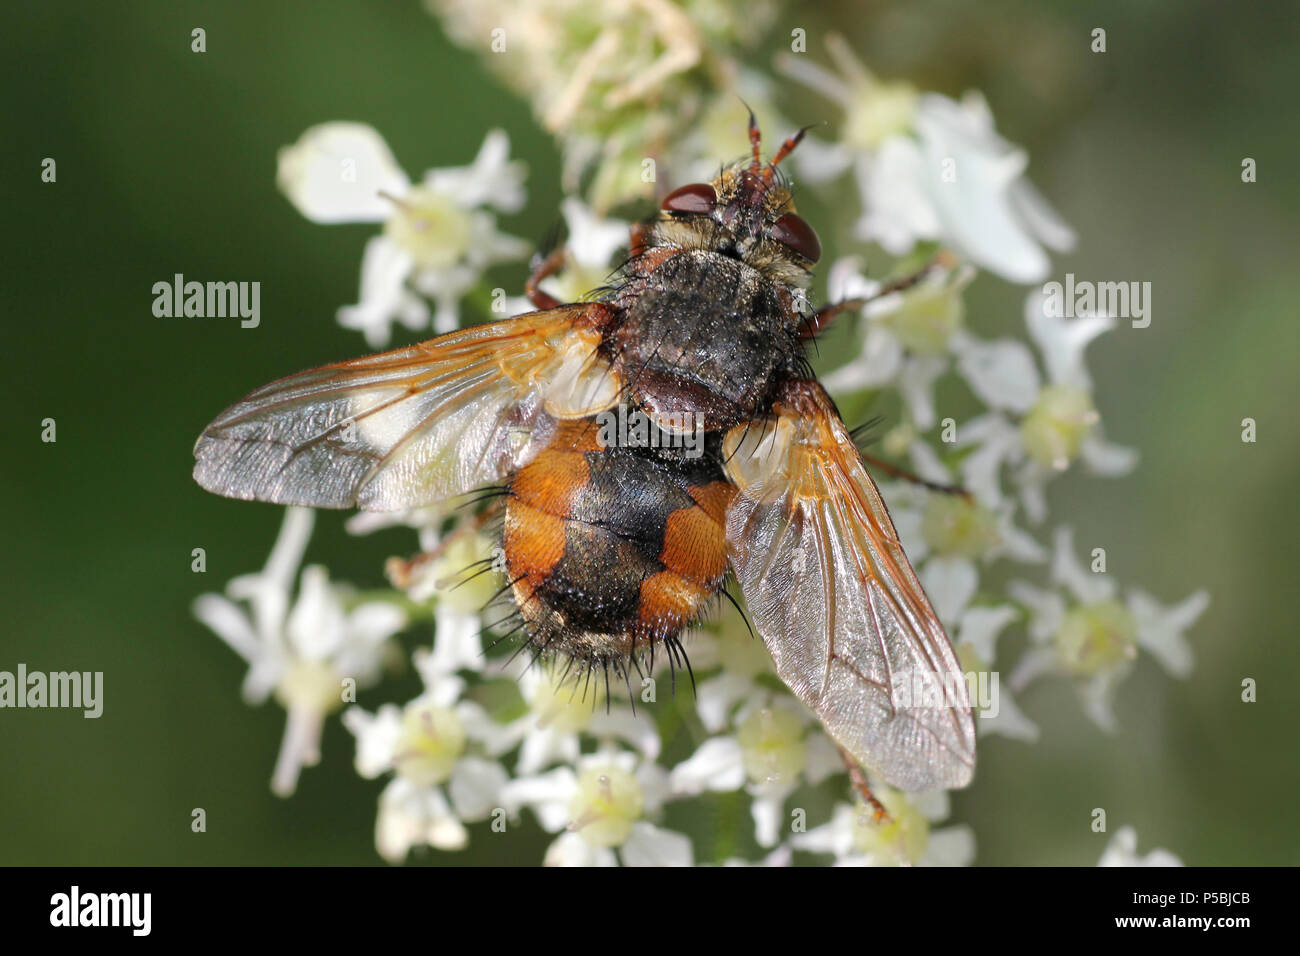 Tachina fera feeding on nectar from an umbellifer flower Stock Photo